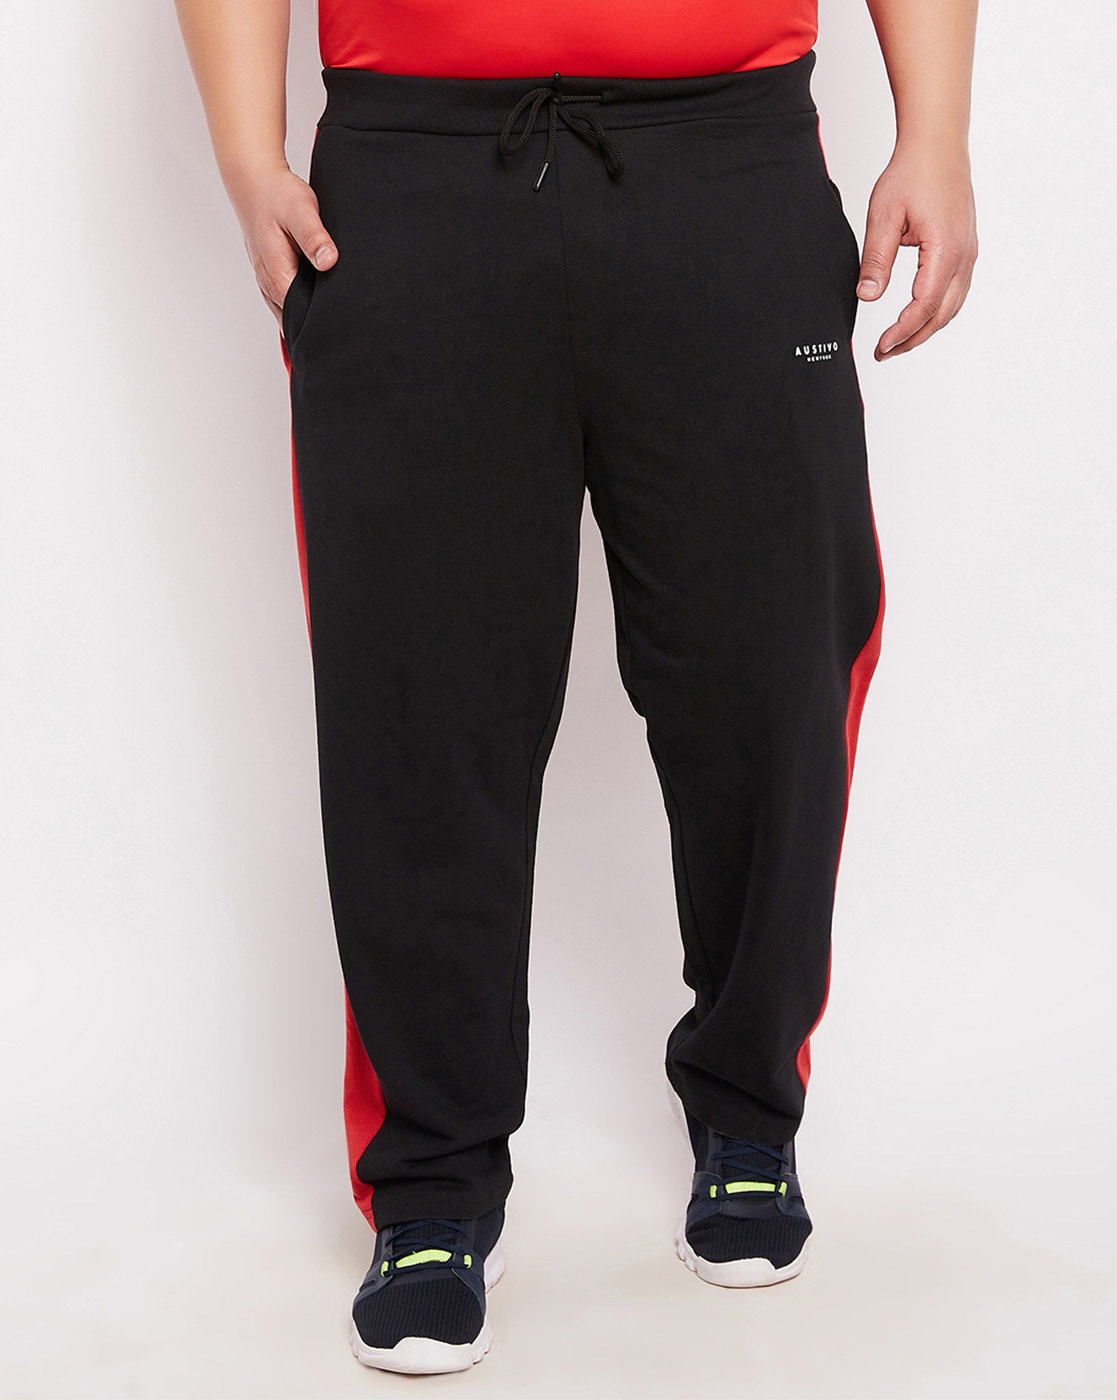 Sporto Men's Solid Cotton Track Pants Navy Denim – Sporto by Macho